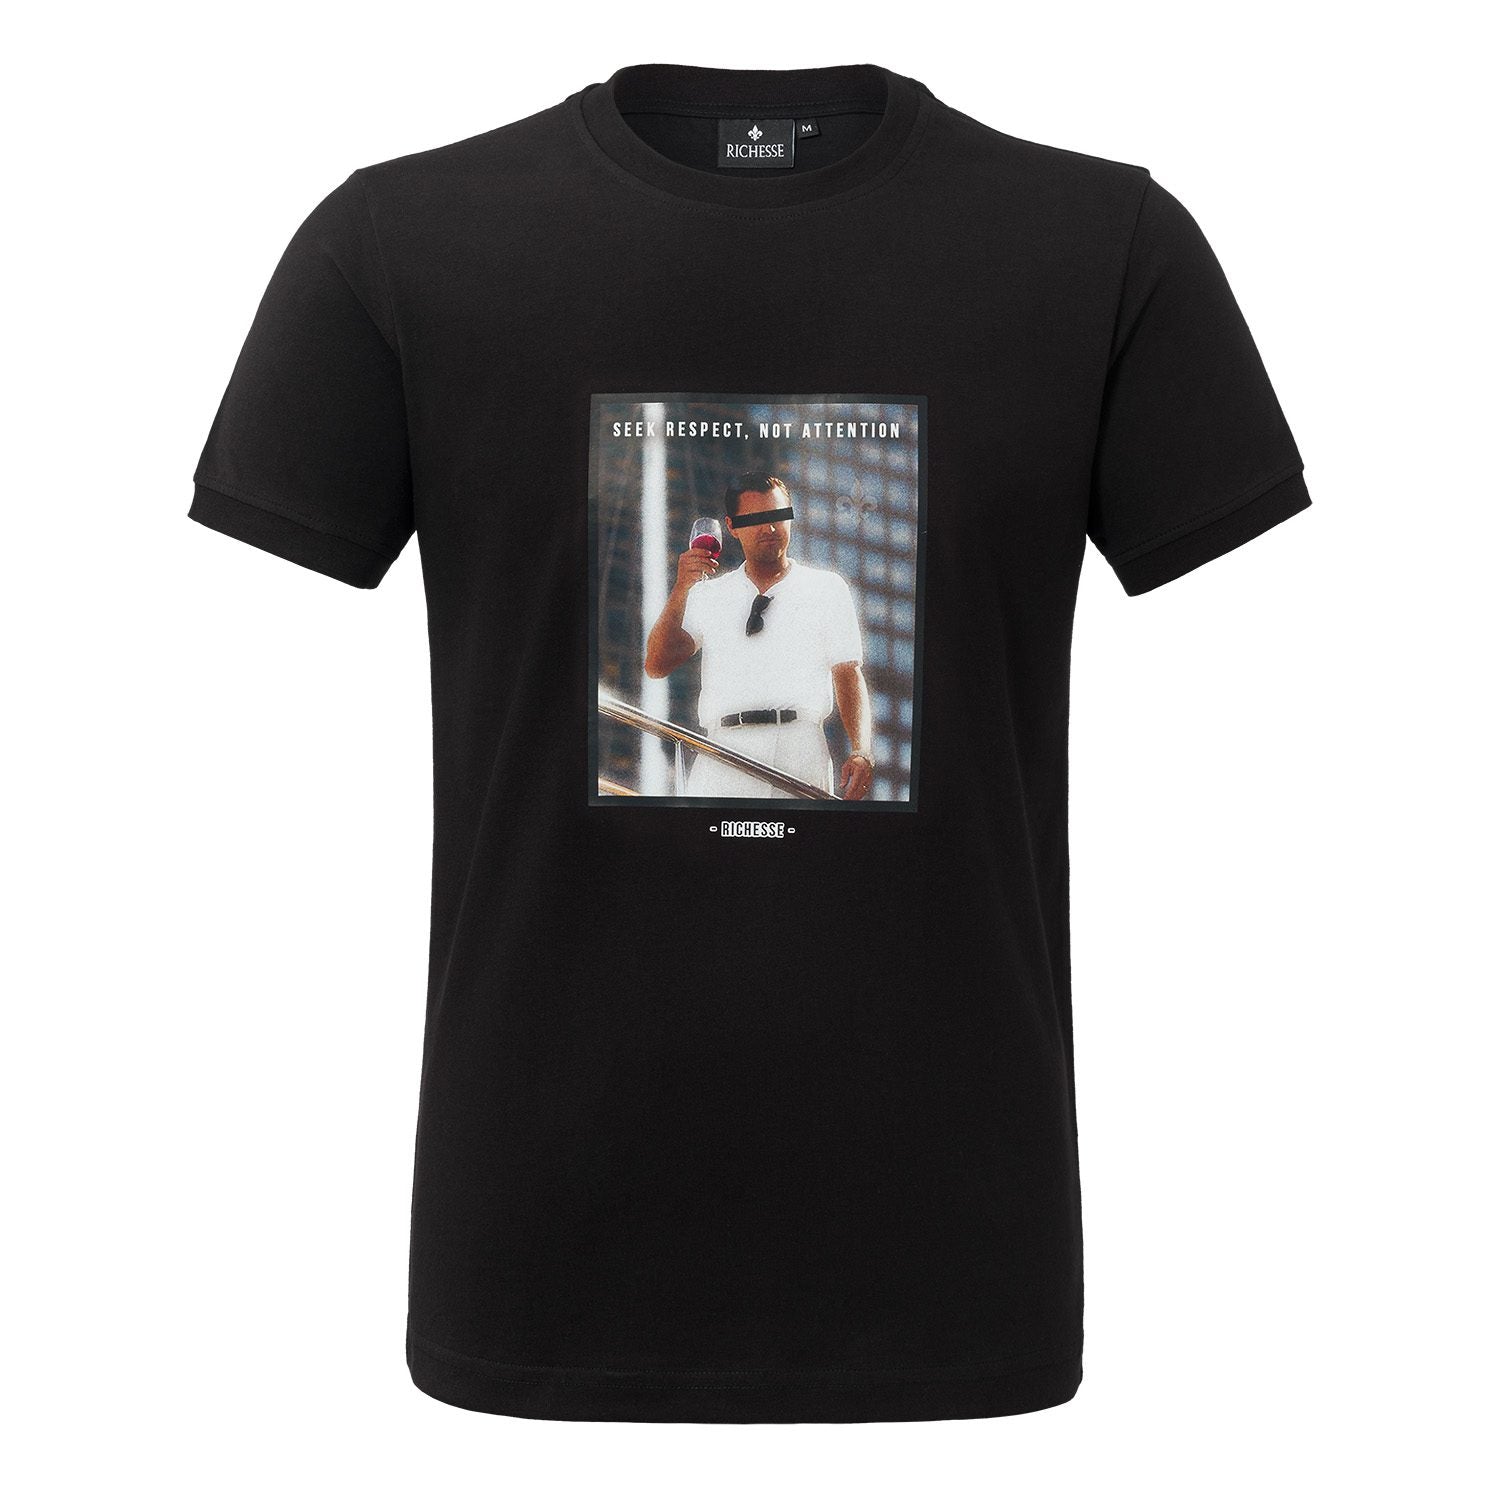 Jordan Black T-shirt